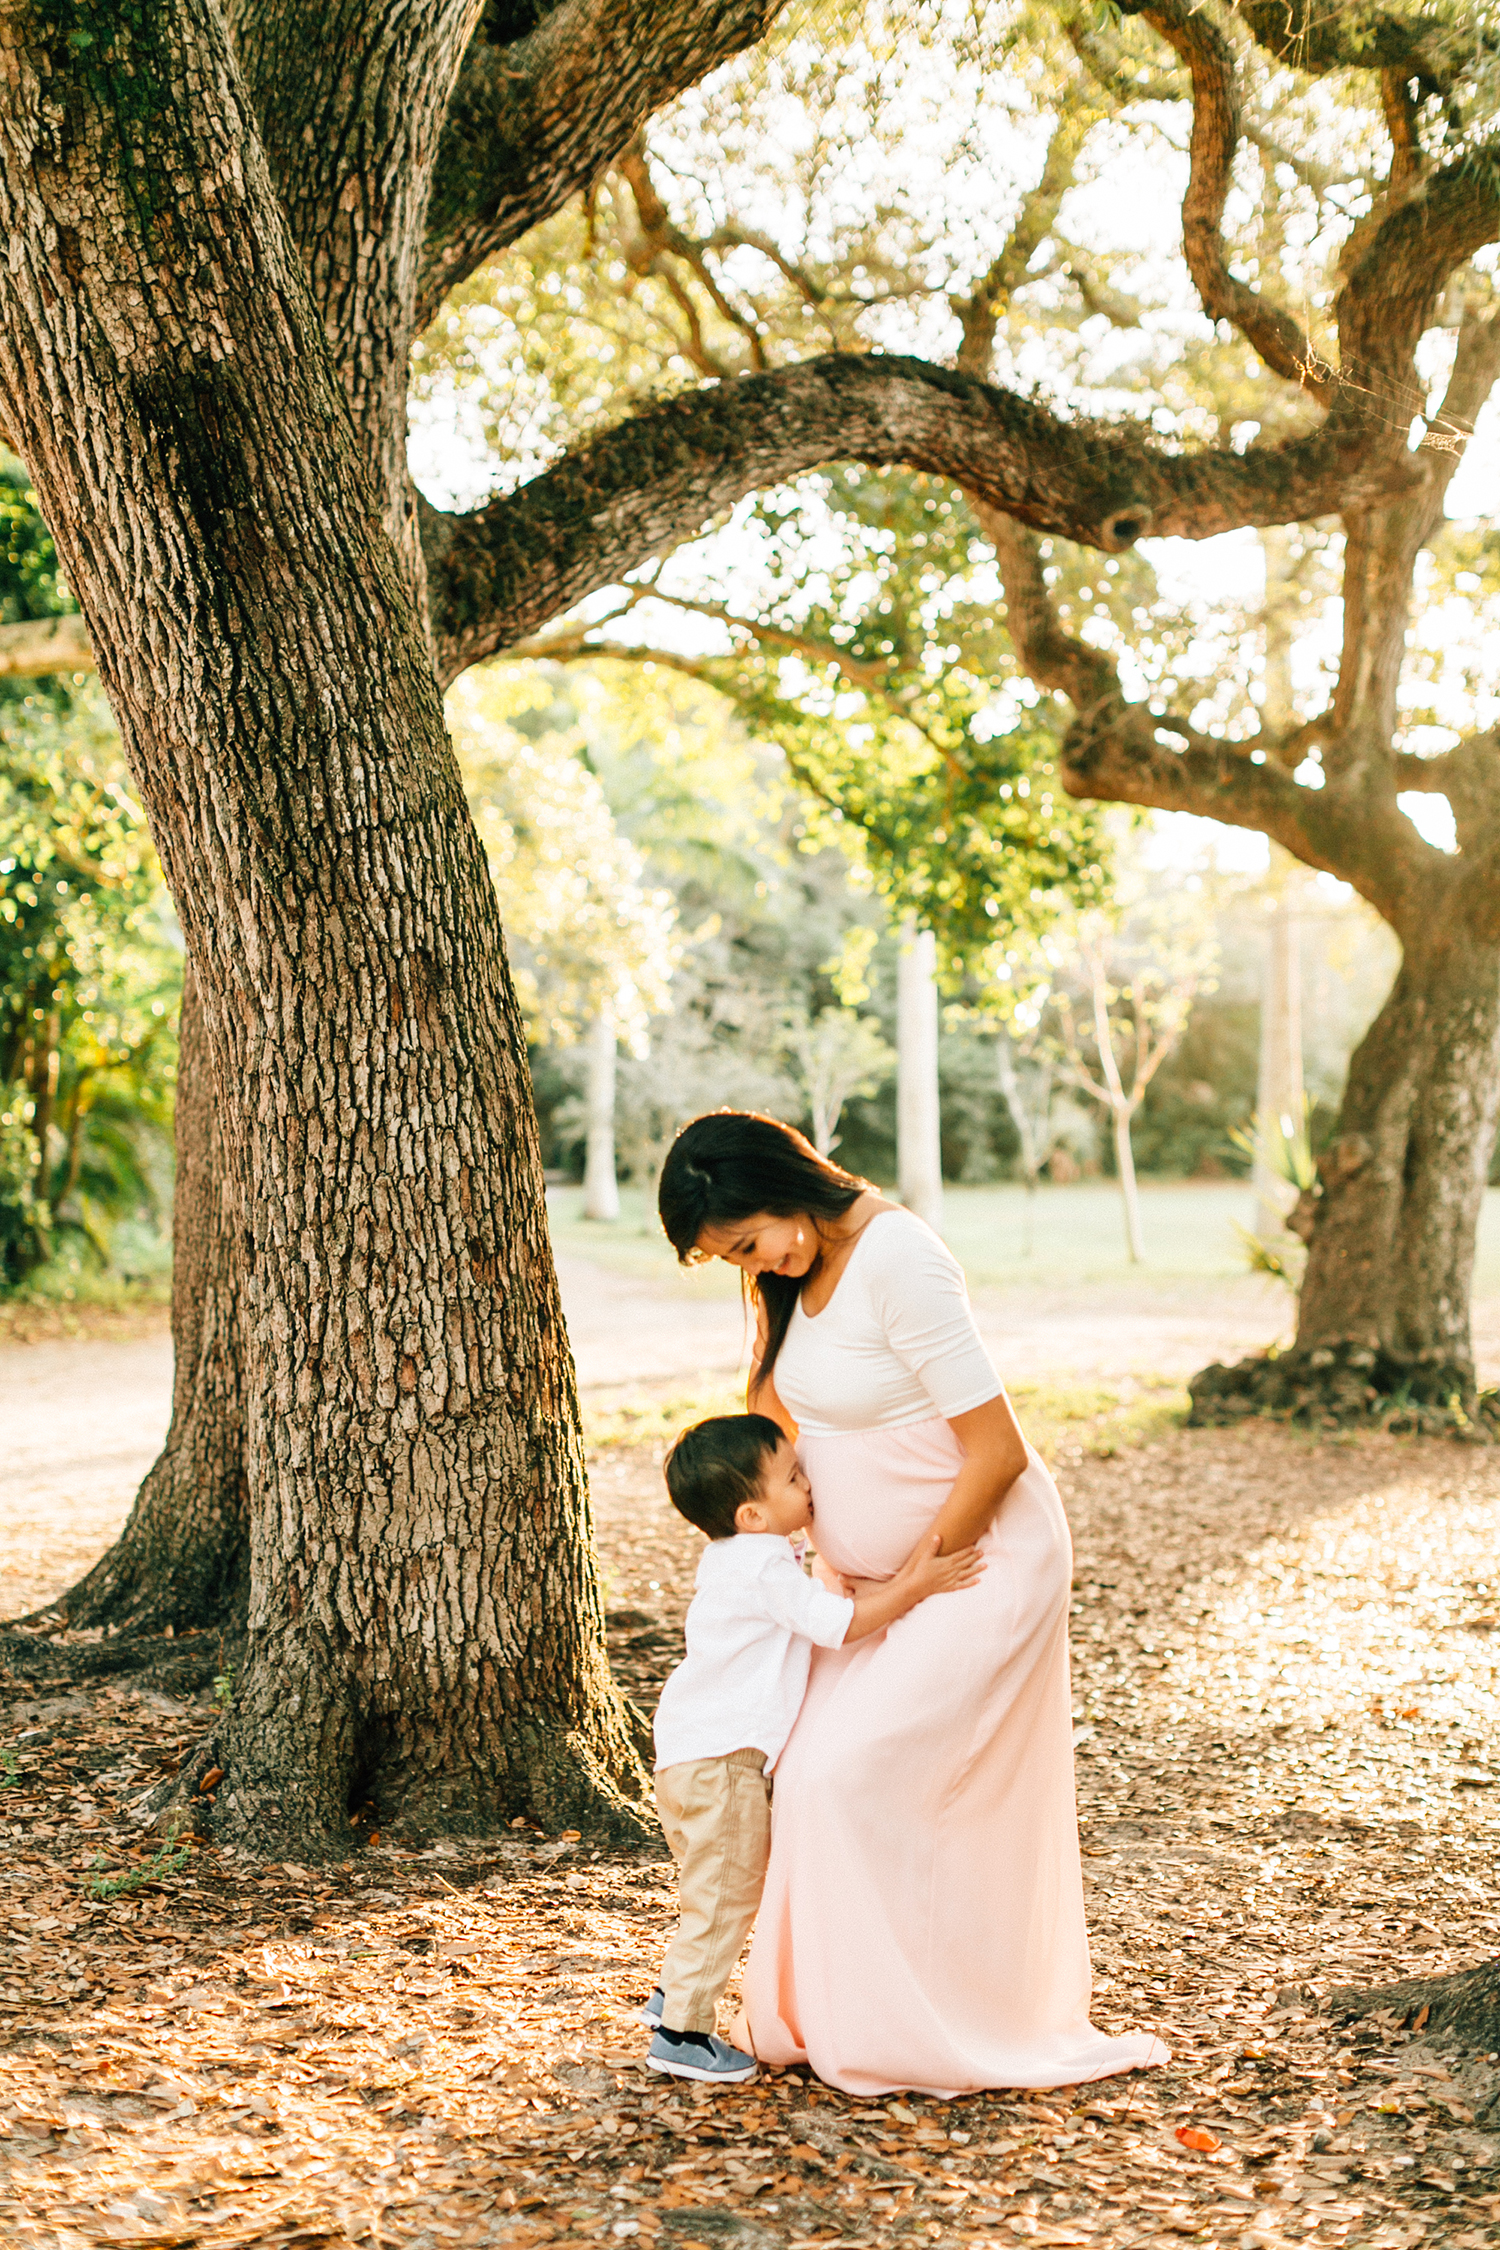 Finding Light Photography Lifestyle Maternity Photographer Florida